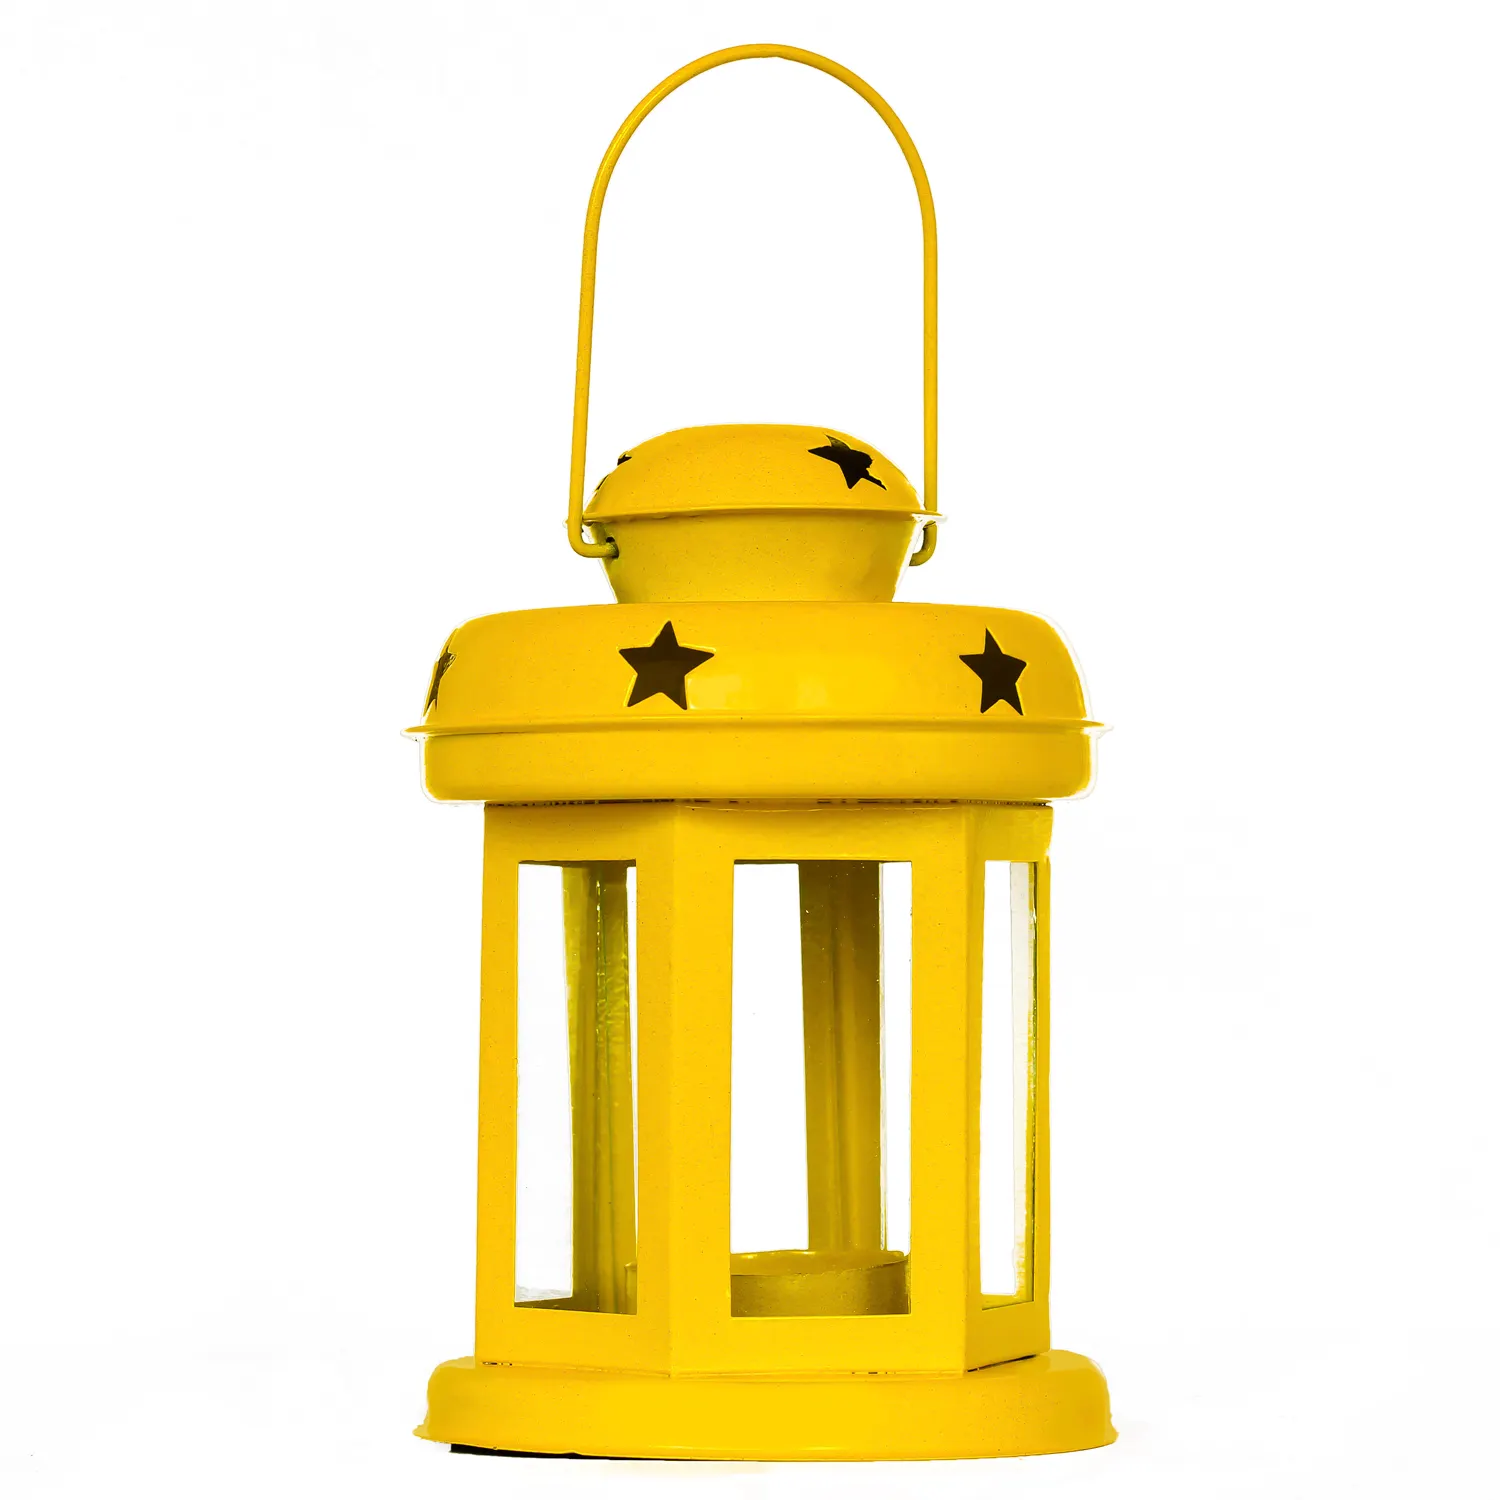 Linternas de Salsa pintadas en amarillo, Combo de Metal y vidrio, lámpara pequeña, vela, soporte de luz de té de color estándar, linternas